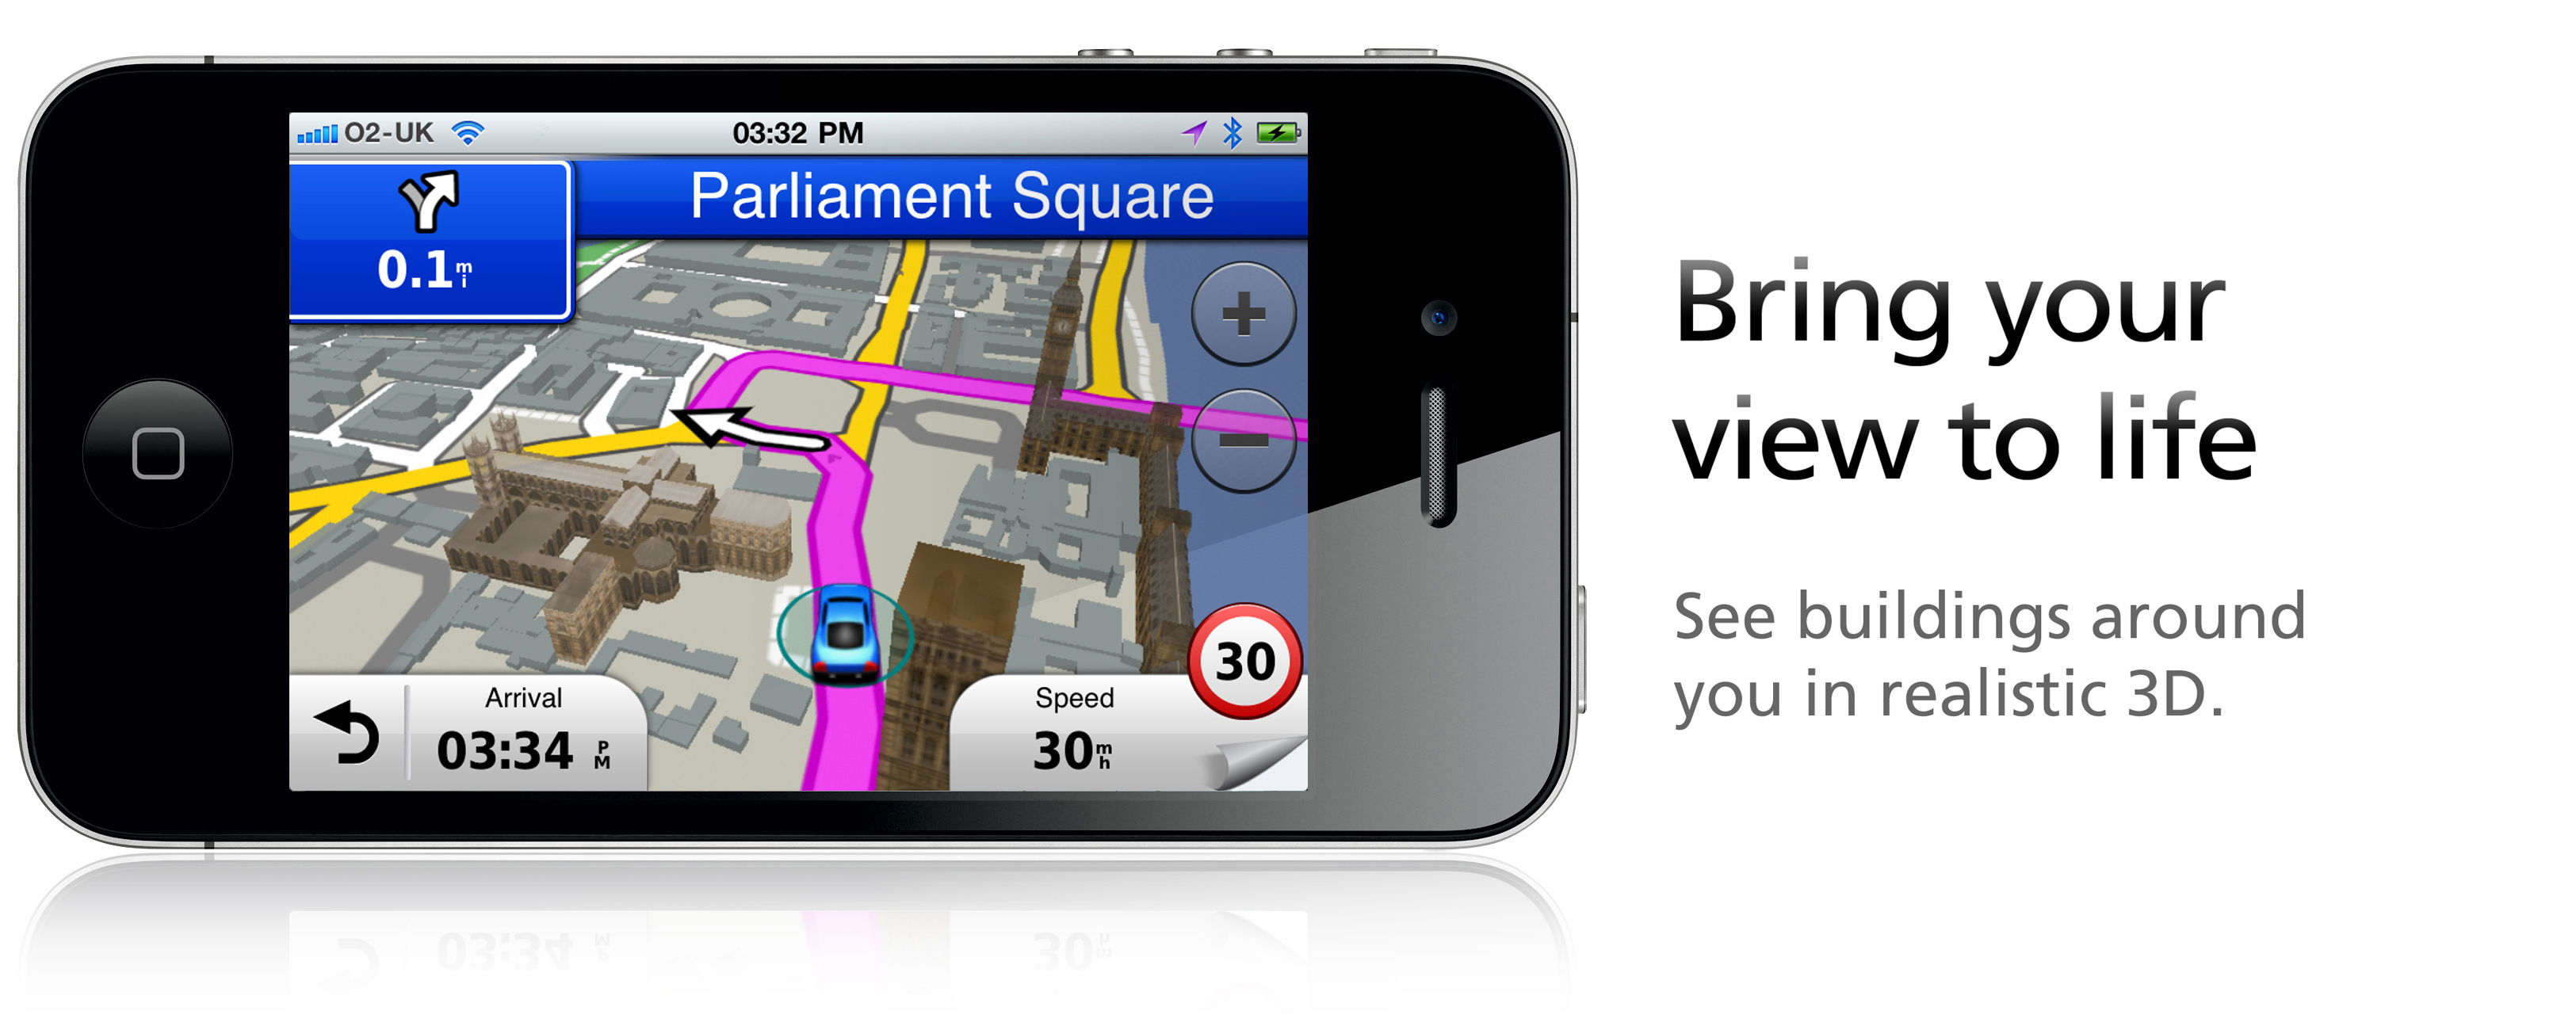 Garmin Navigation for iPhone has 